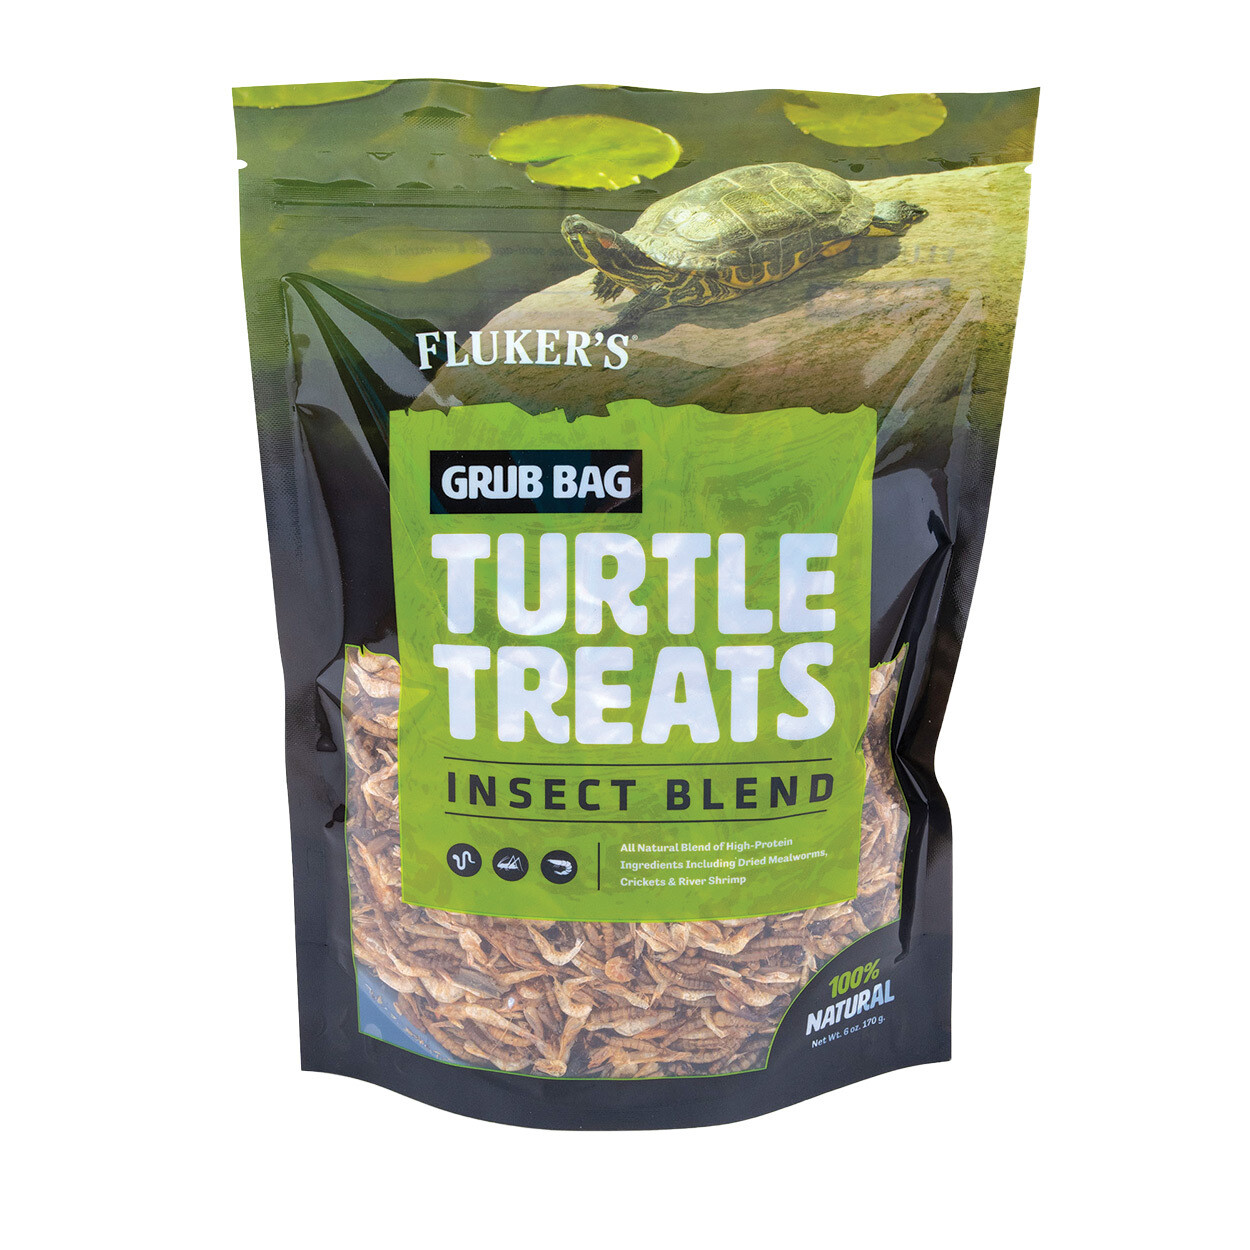 Fluker's Grub Bag Turtle Treats - Insect Blend - 170g (6oz)